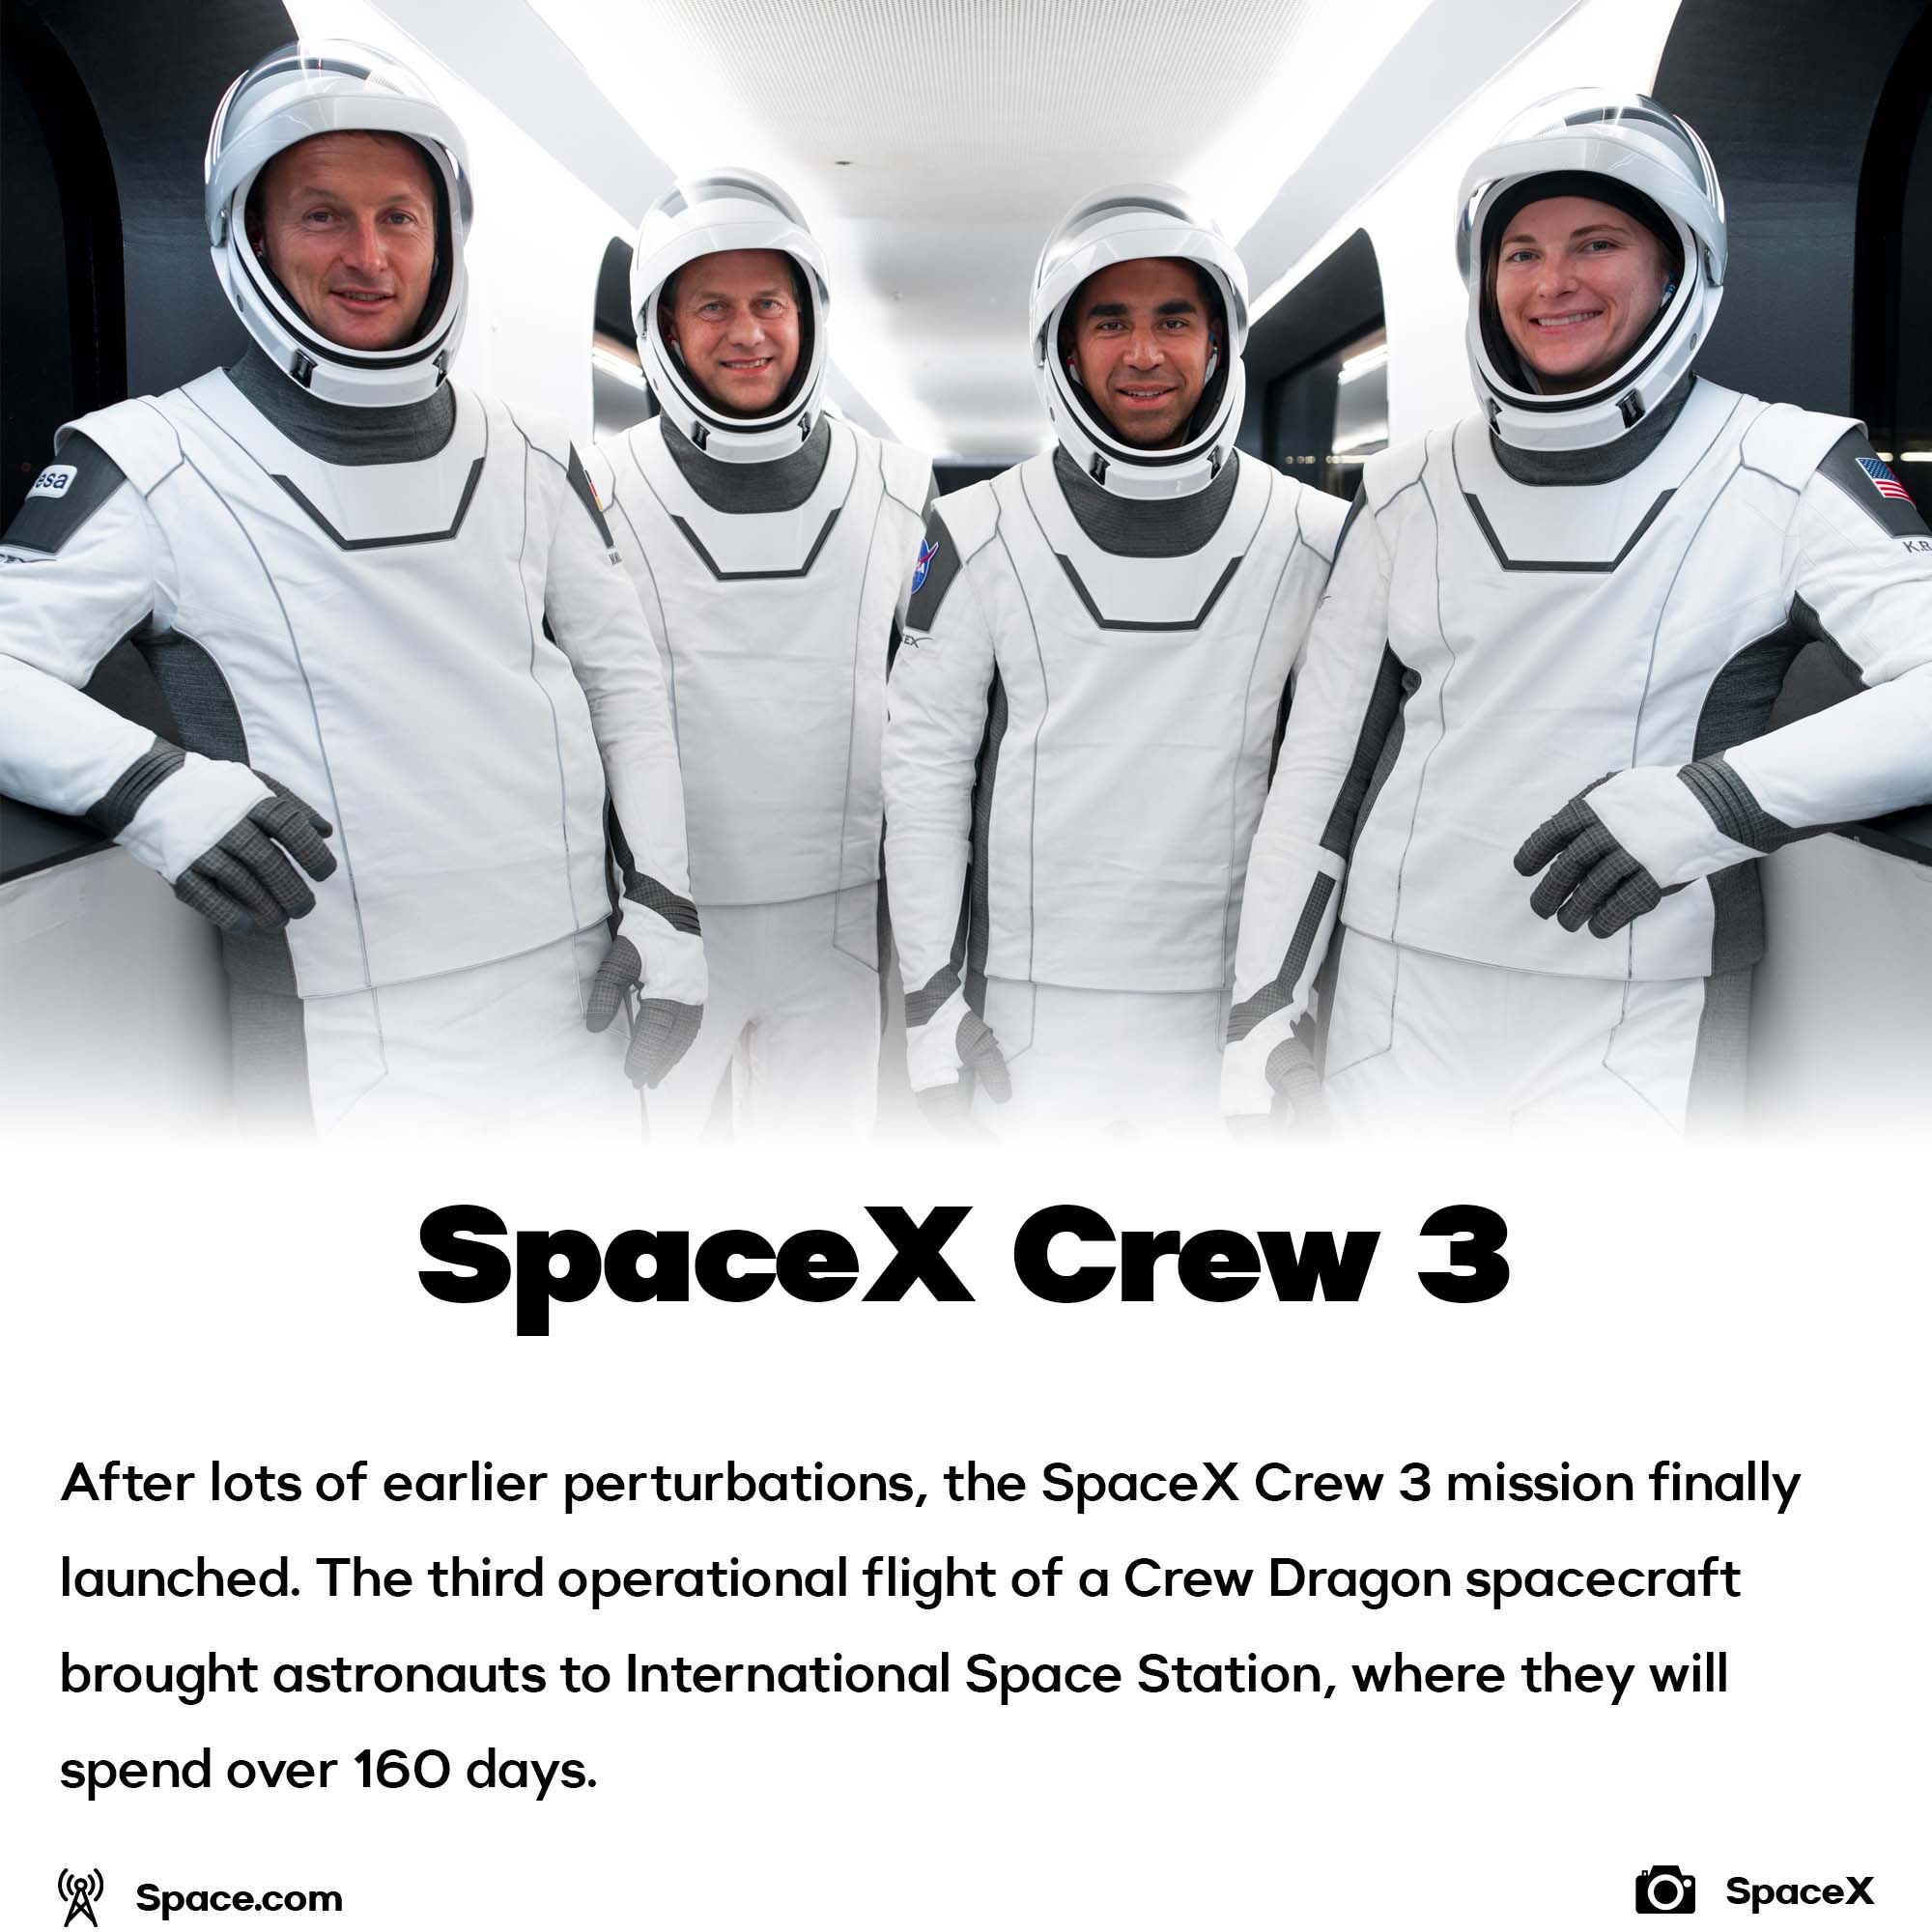 Spacex Crew 3 mission finally begun